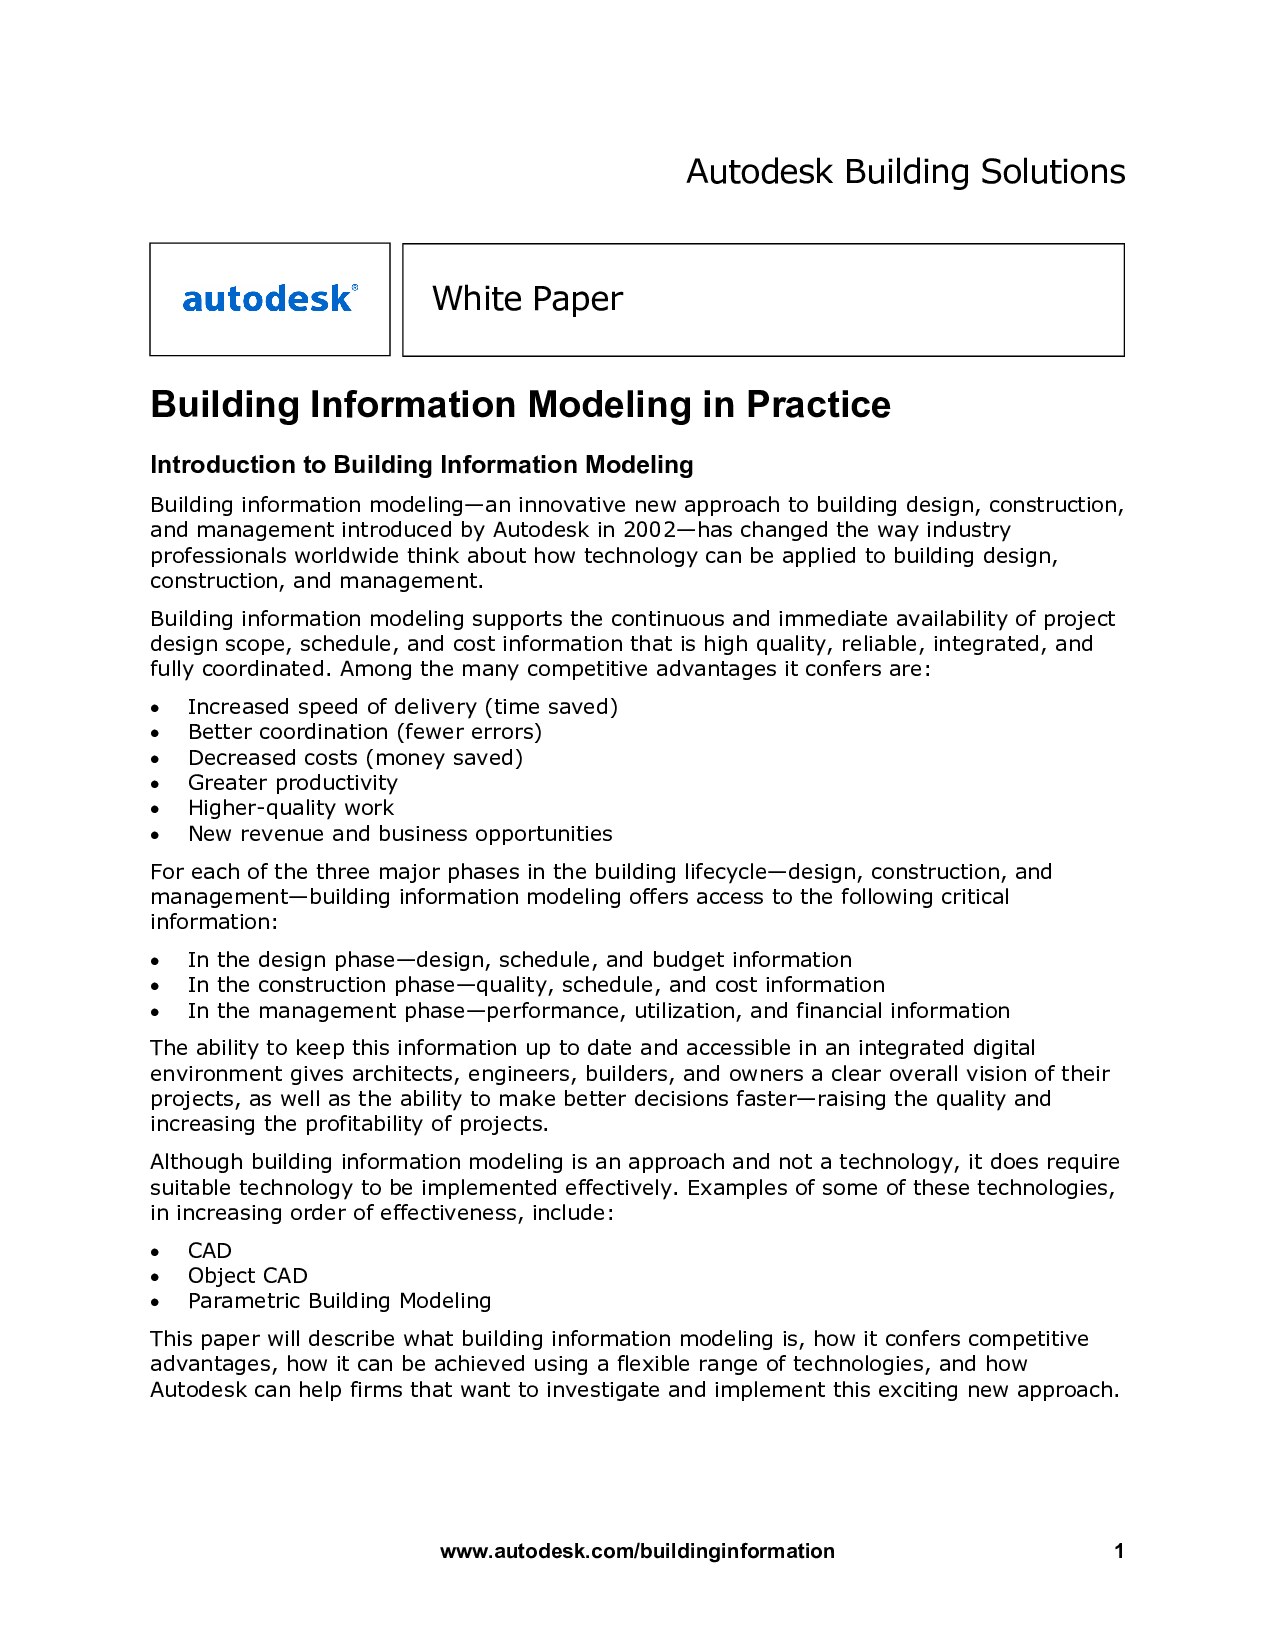 Building Information Modeling in Practice